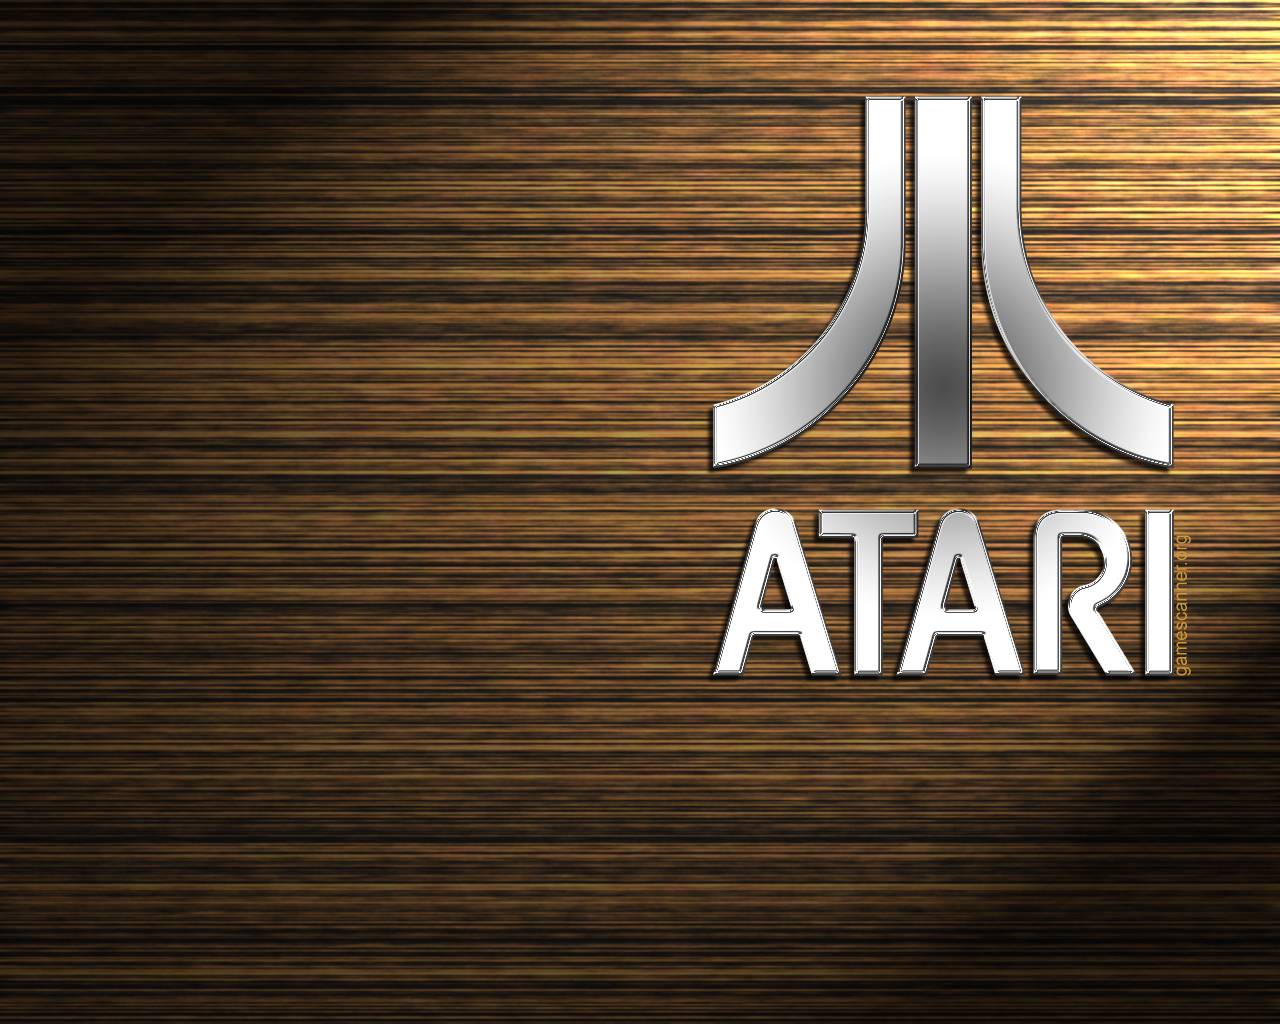 Video Atari Games Images Title Photos Spots Backgrounds